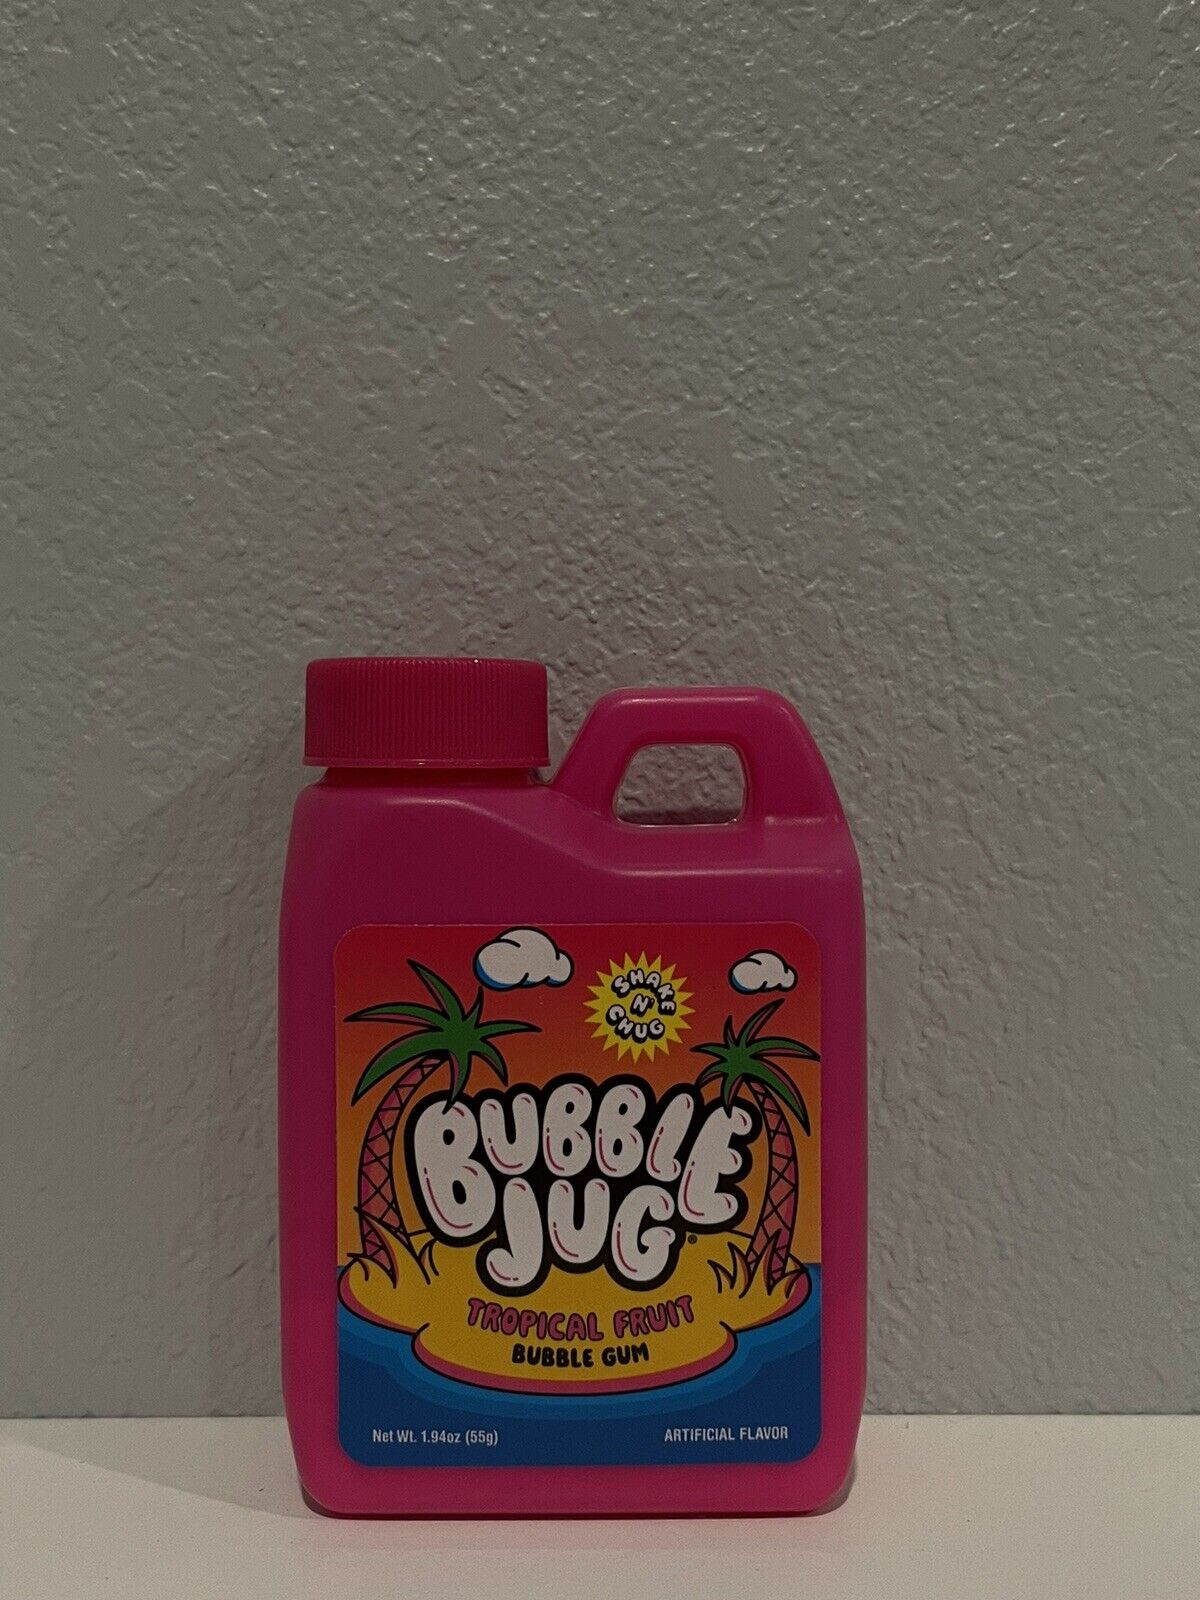 Hubba bubba bubble jug gum (ships Now)